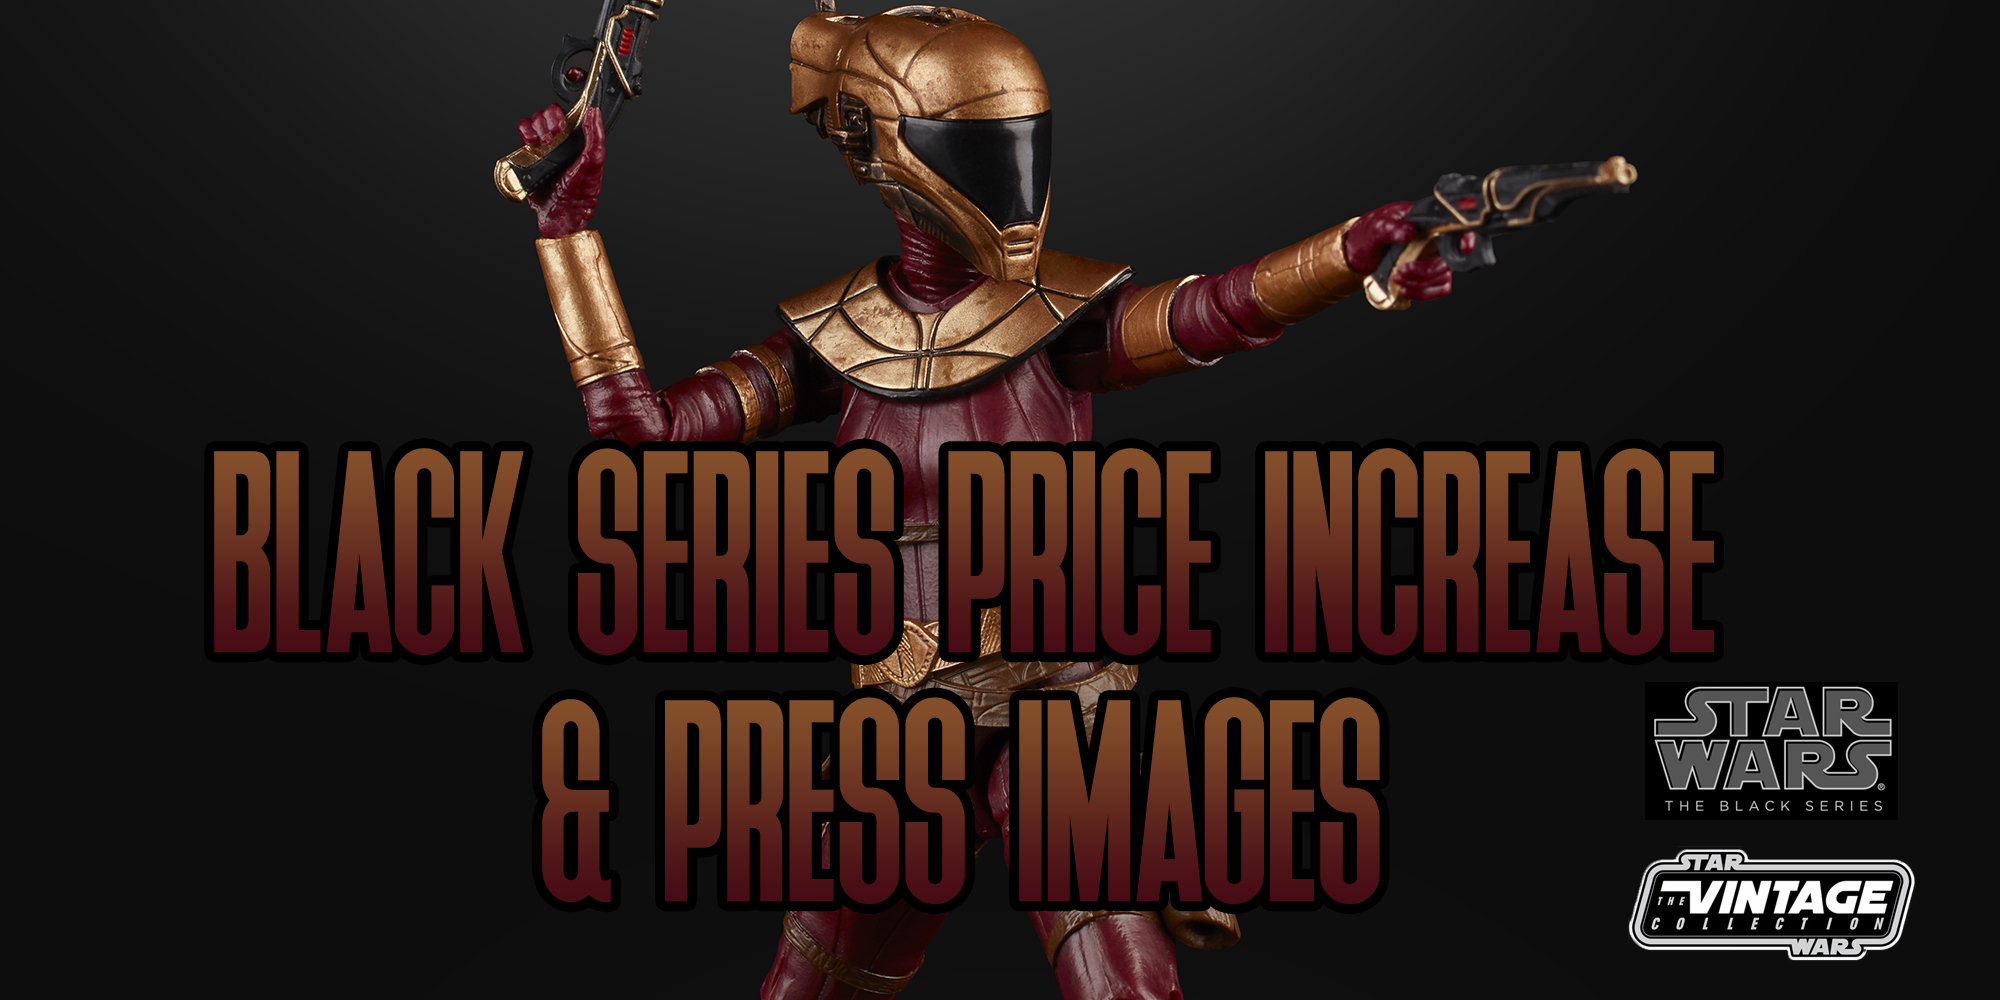 Black Series Price Increase Coming | New Press Images